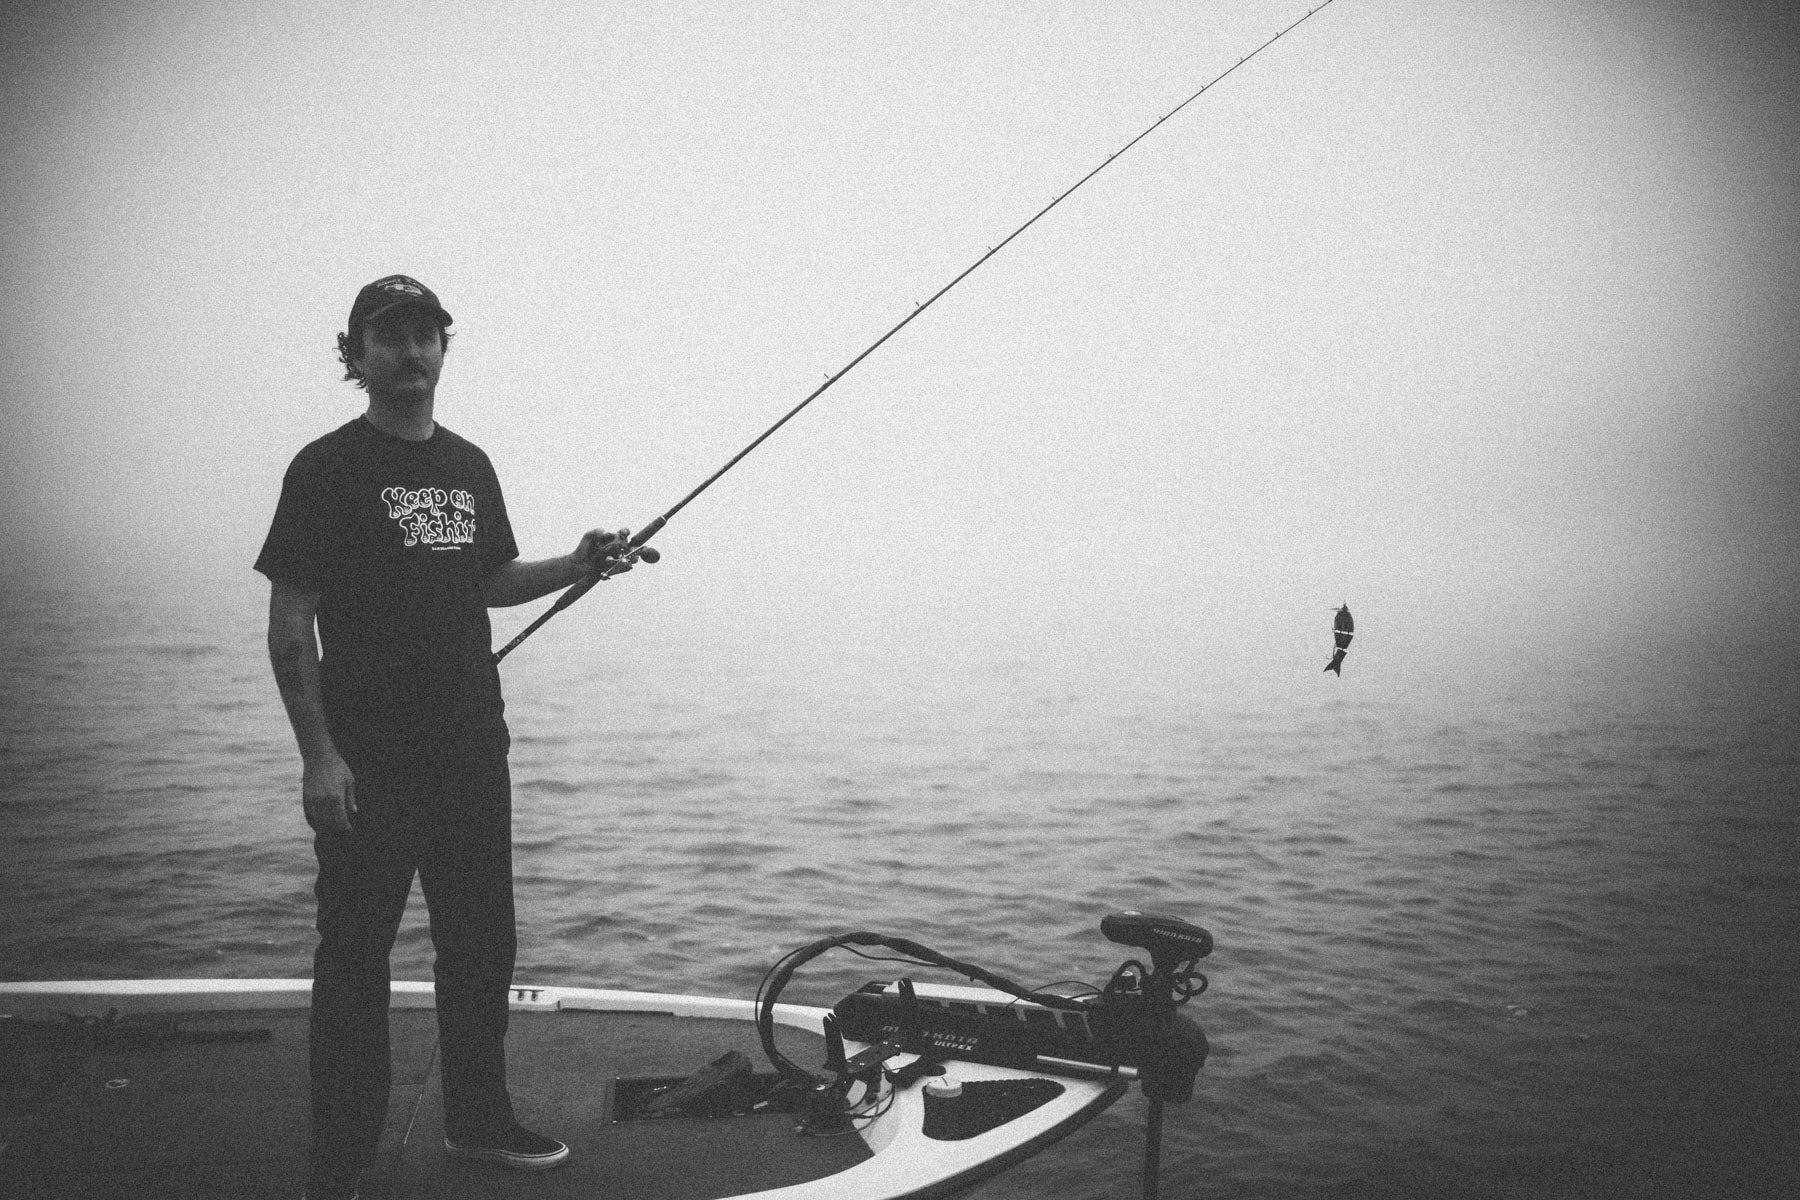 Stream-Born & Wild - Pumpkin - Fly Fishing T Shirt – JOE'S Fishing Shirts